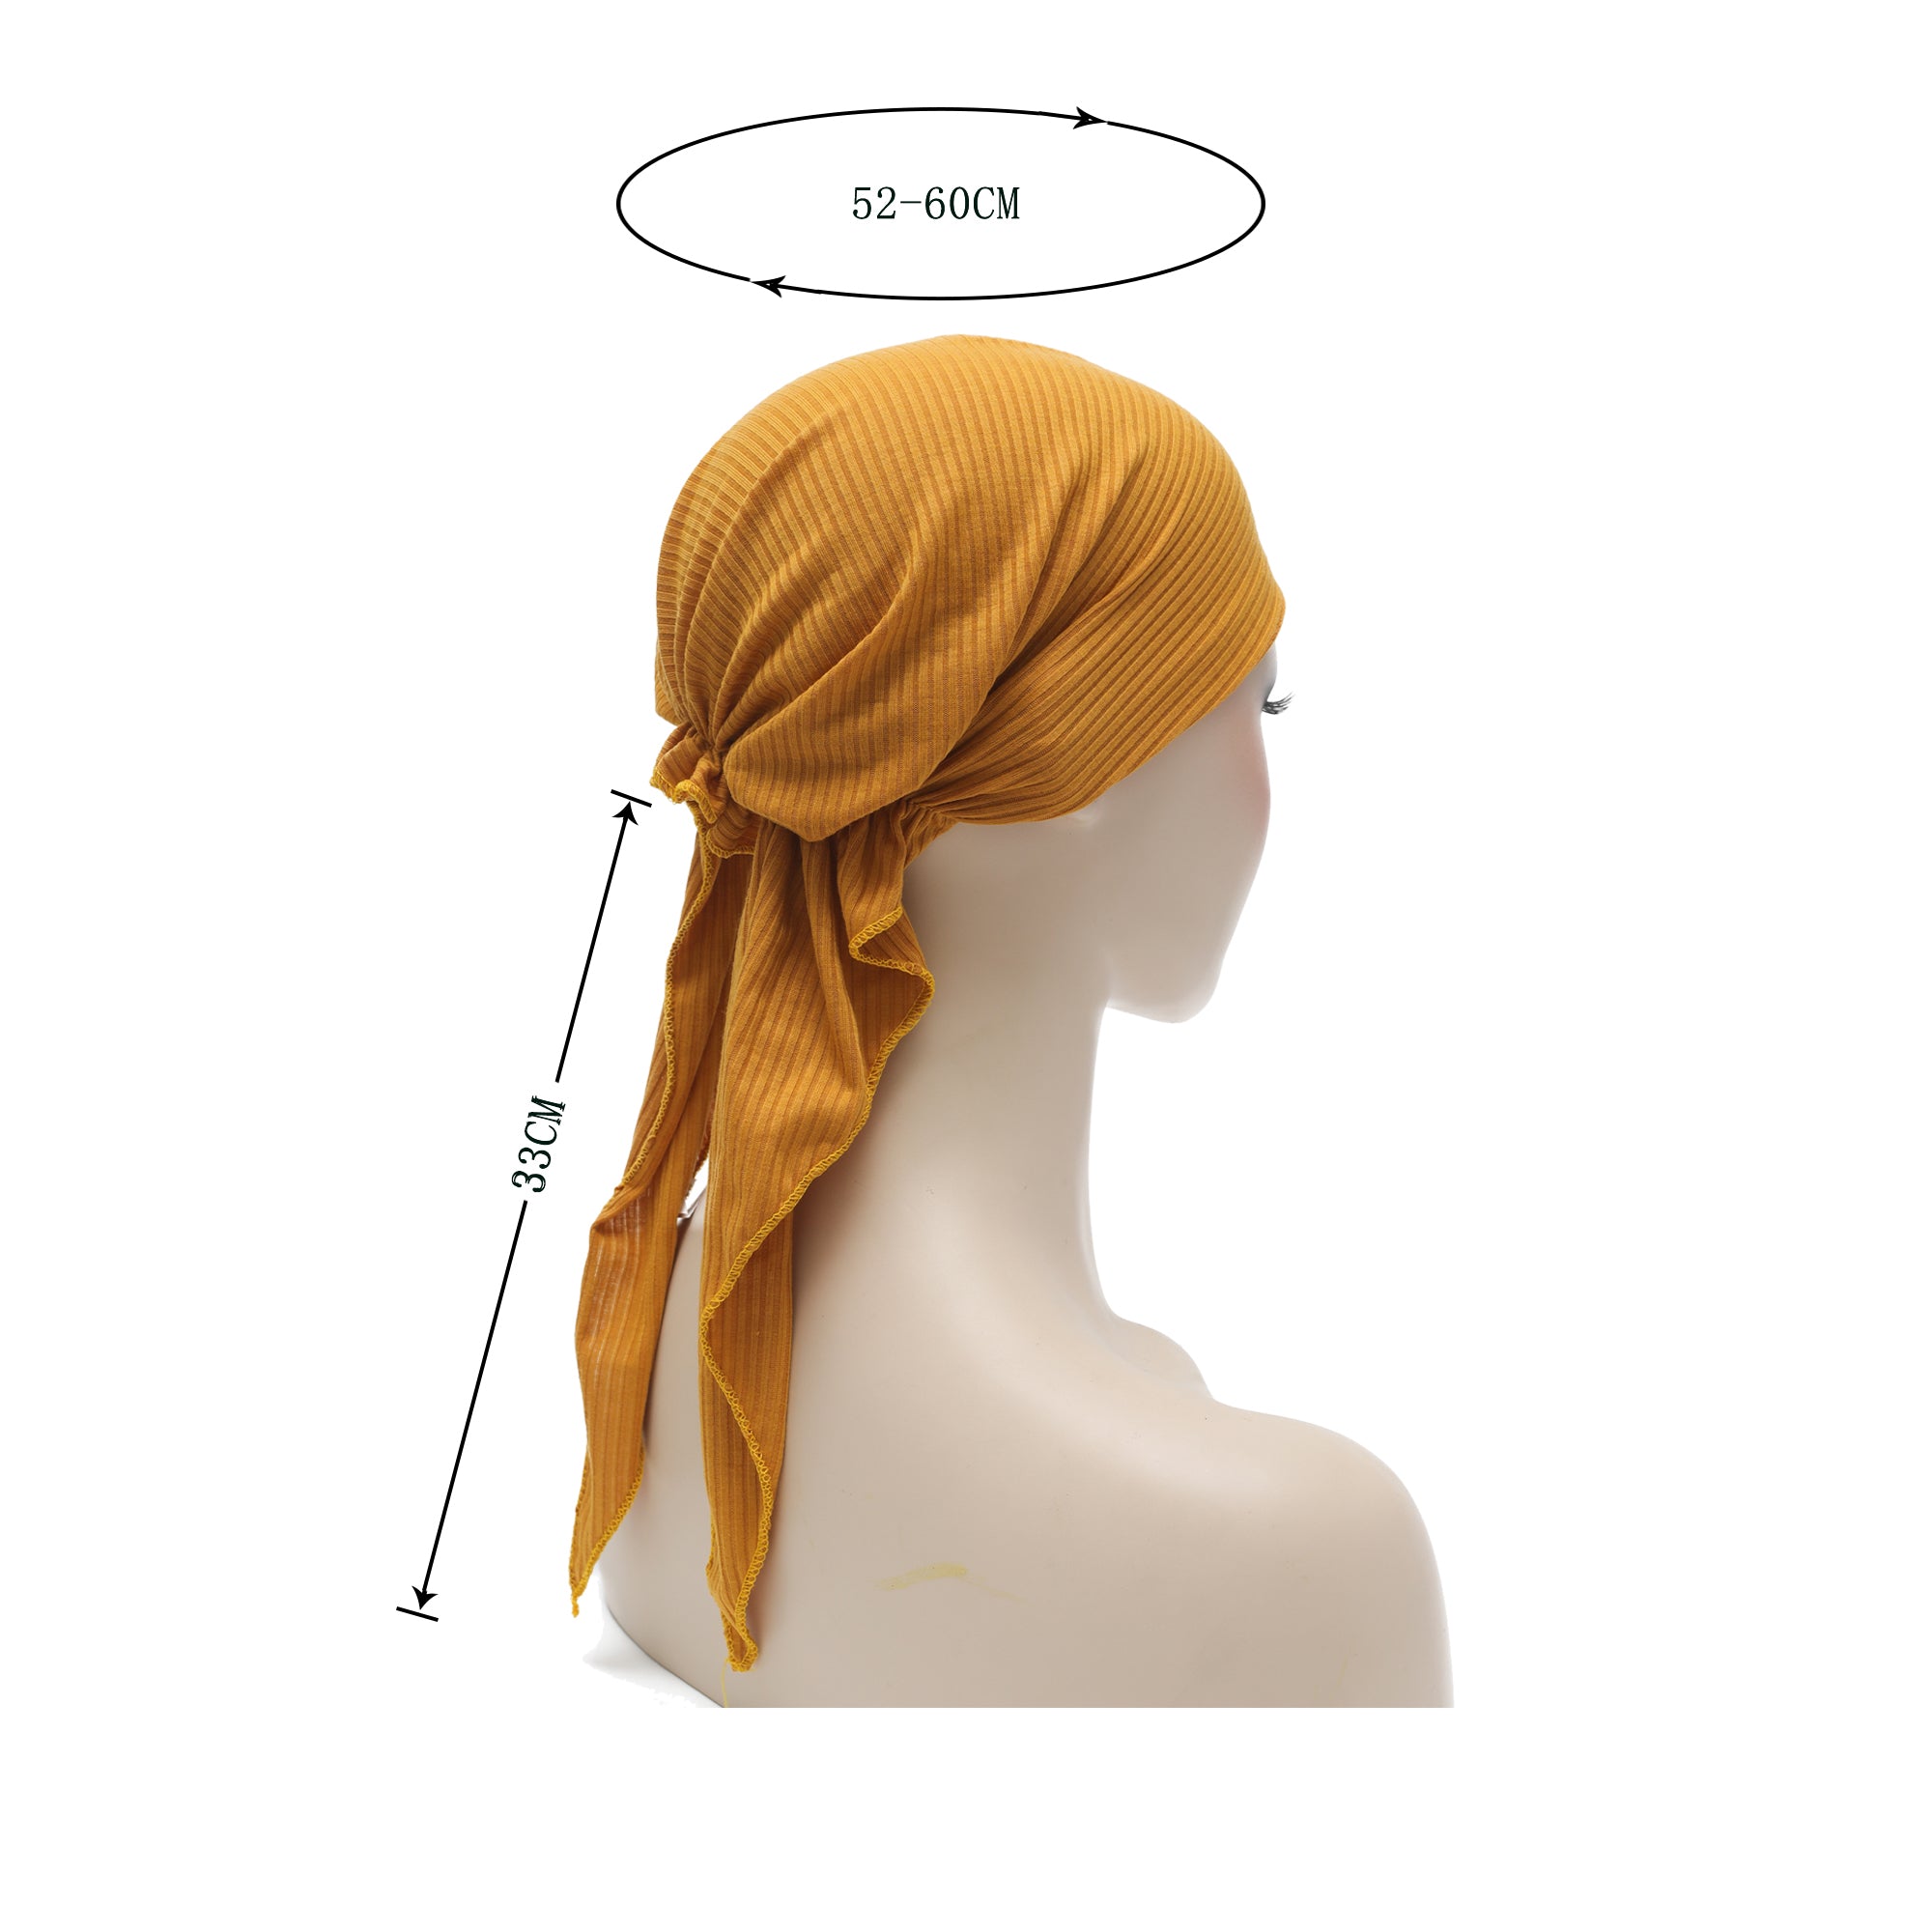 ZLYC Chemo Headwear Pre Tied Head Scarf Headwraps Lightweight Turban Beanie Cap for Women (Solid Yellow)